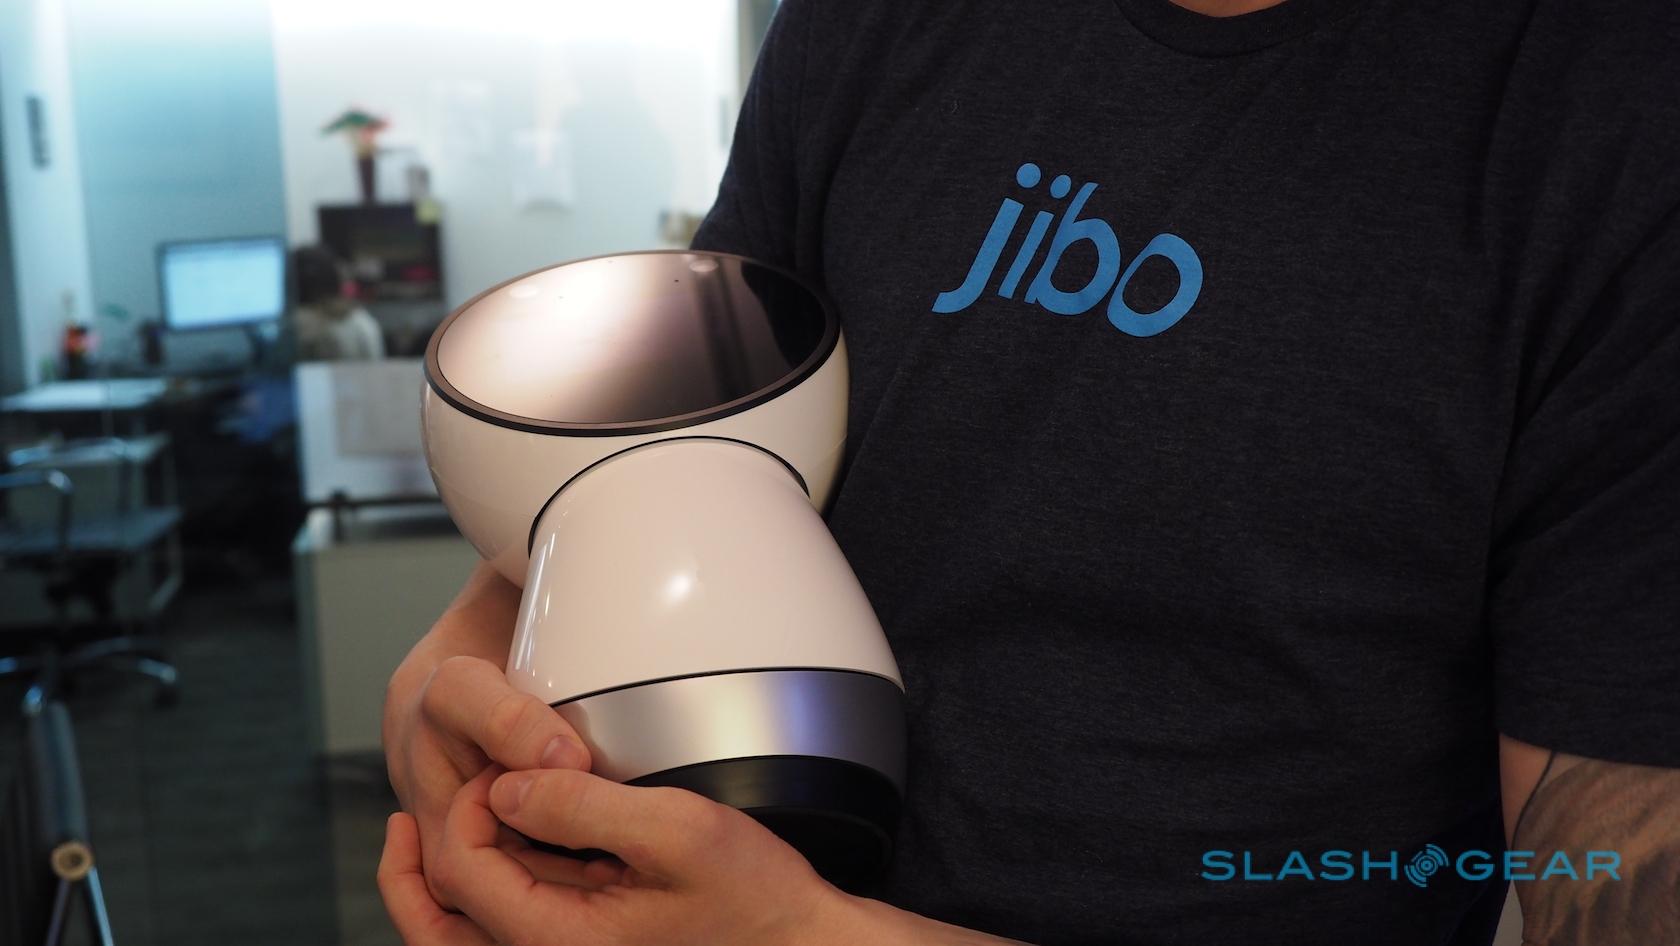 jibo-robot-4